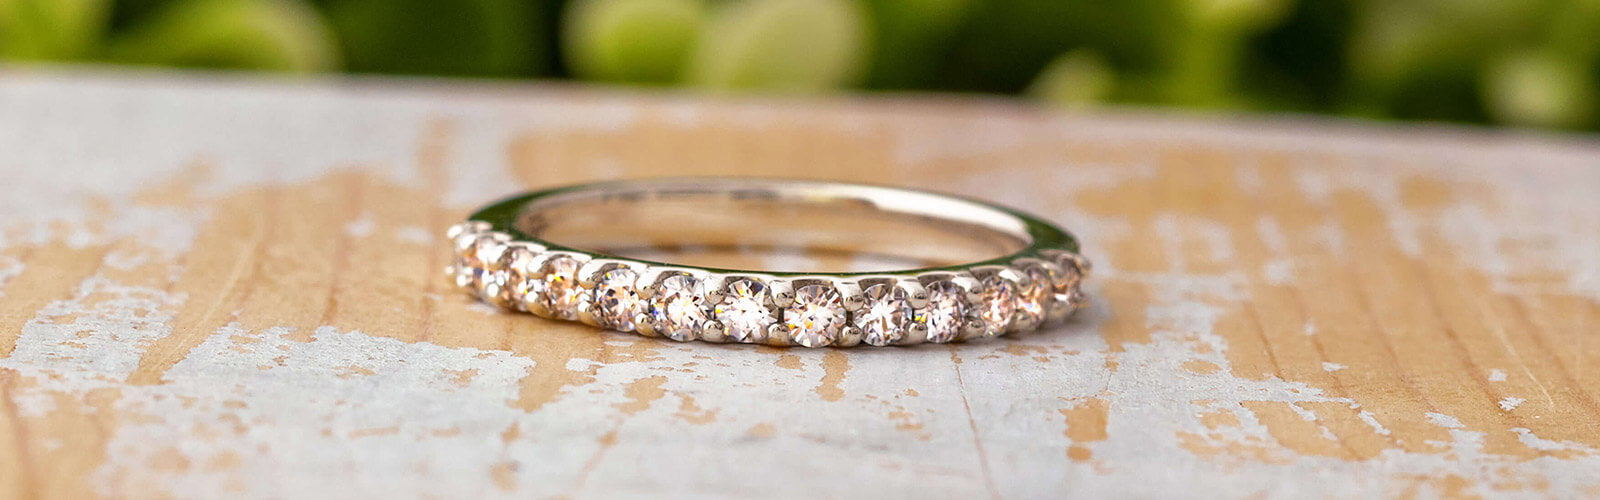 14K White Gold Round Halo Engagement Ring 83493-10-14KW | Geralds Jewelry |  Oak Harbor, WA